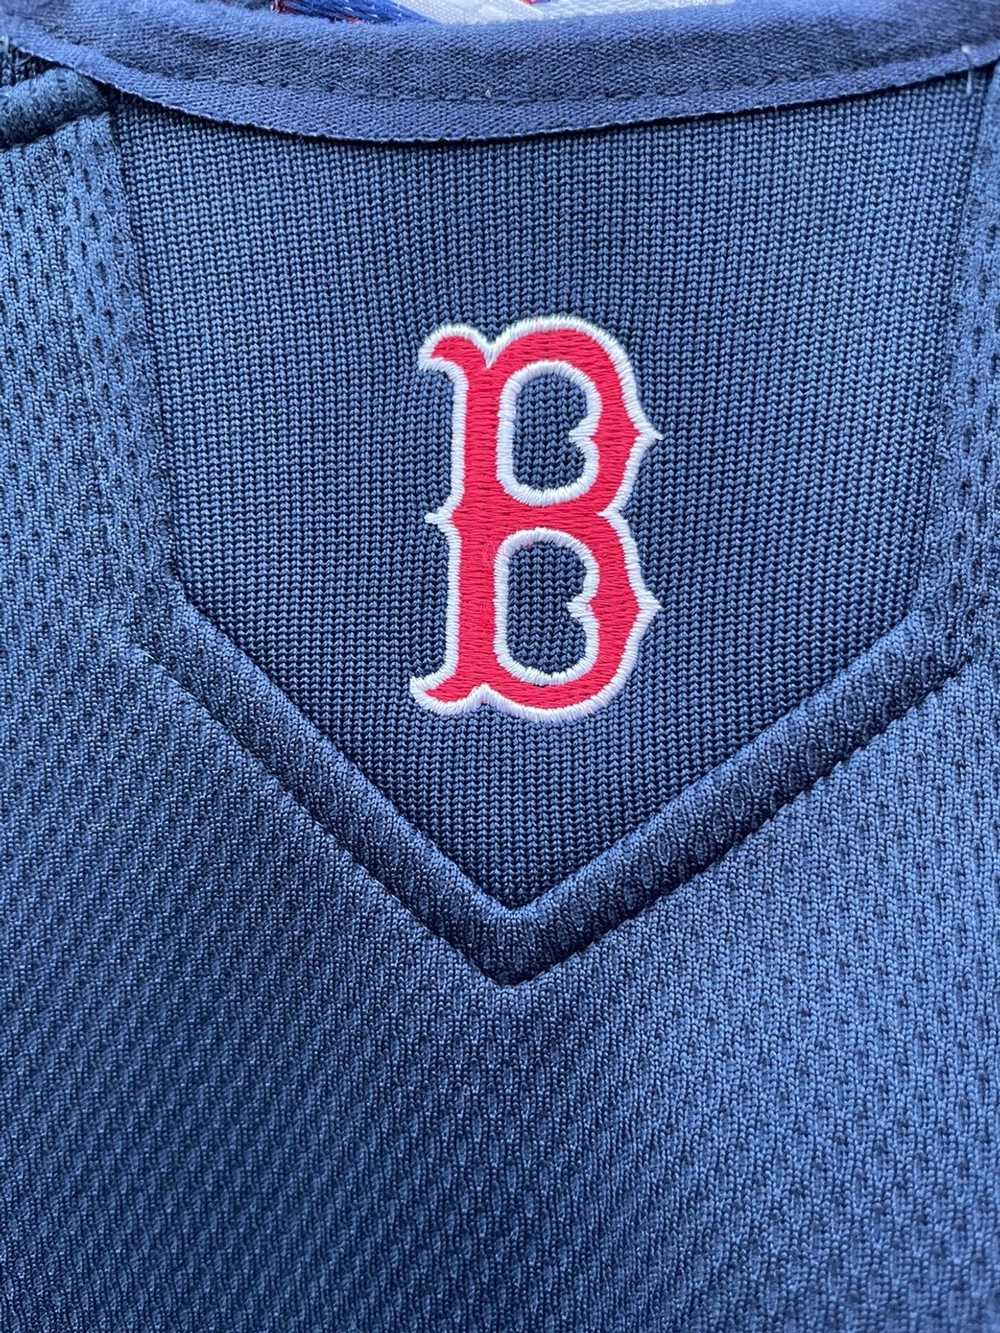 BOSTON RED SOX JACOBY ELLSBURY 2007 WORLD SERIES MAJESTIC MLB JERSEY LARGE  – The Felt Fanatic